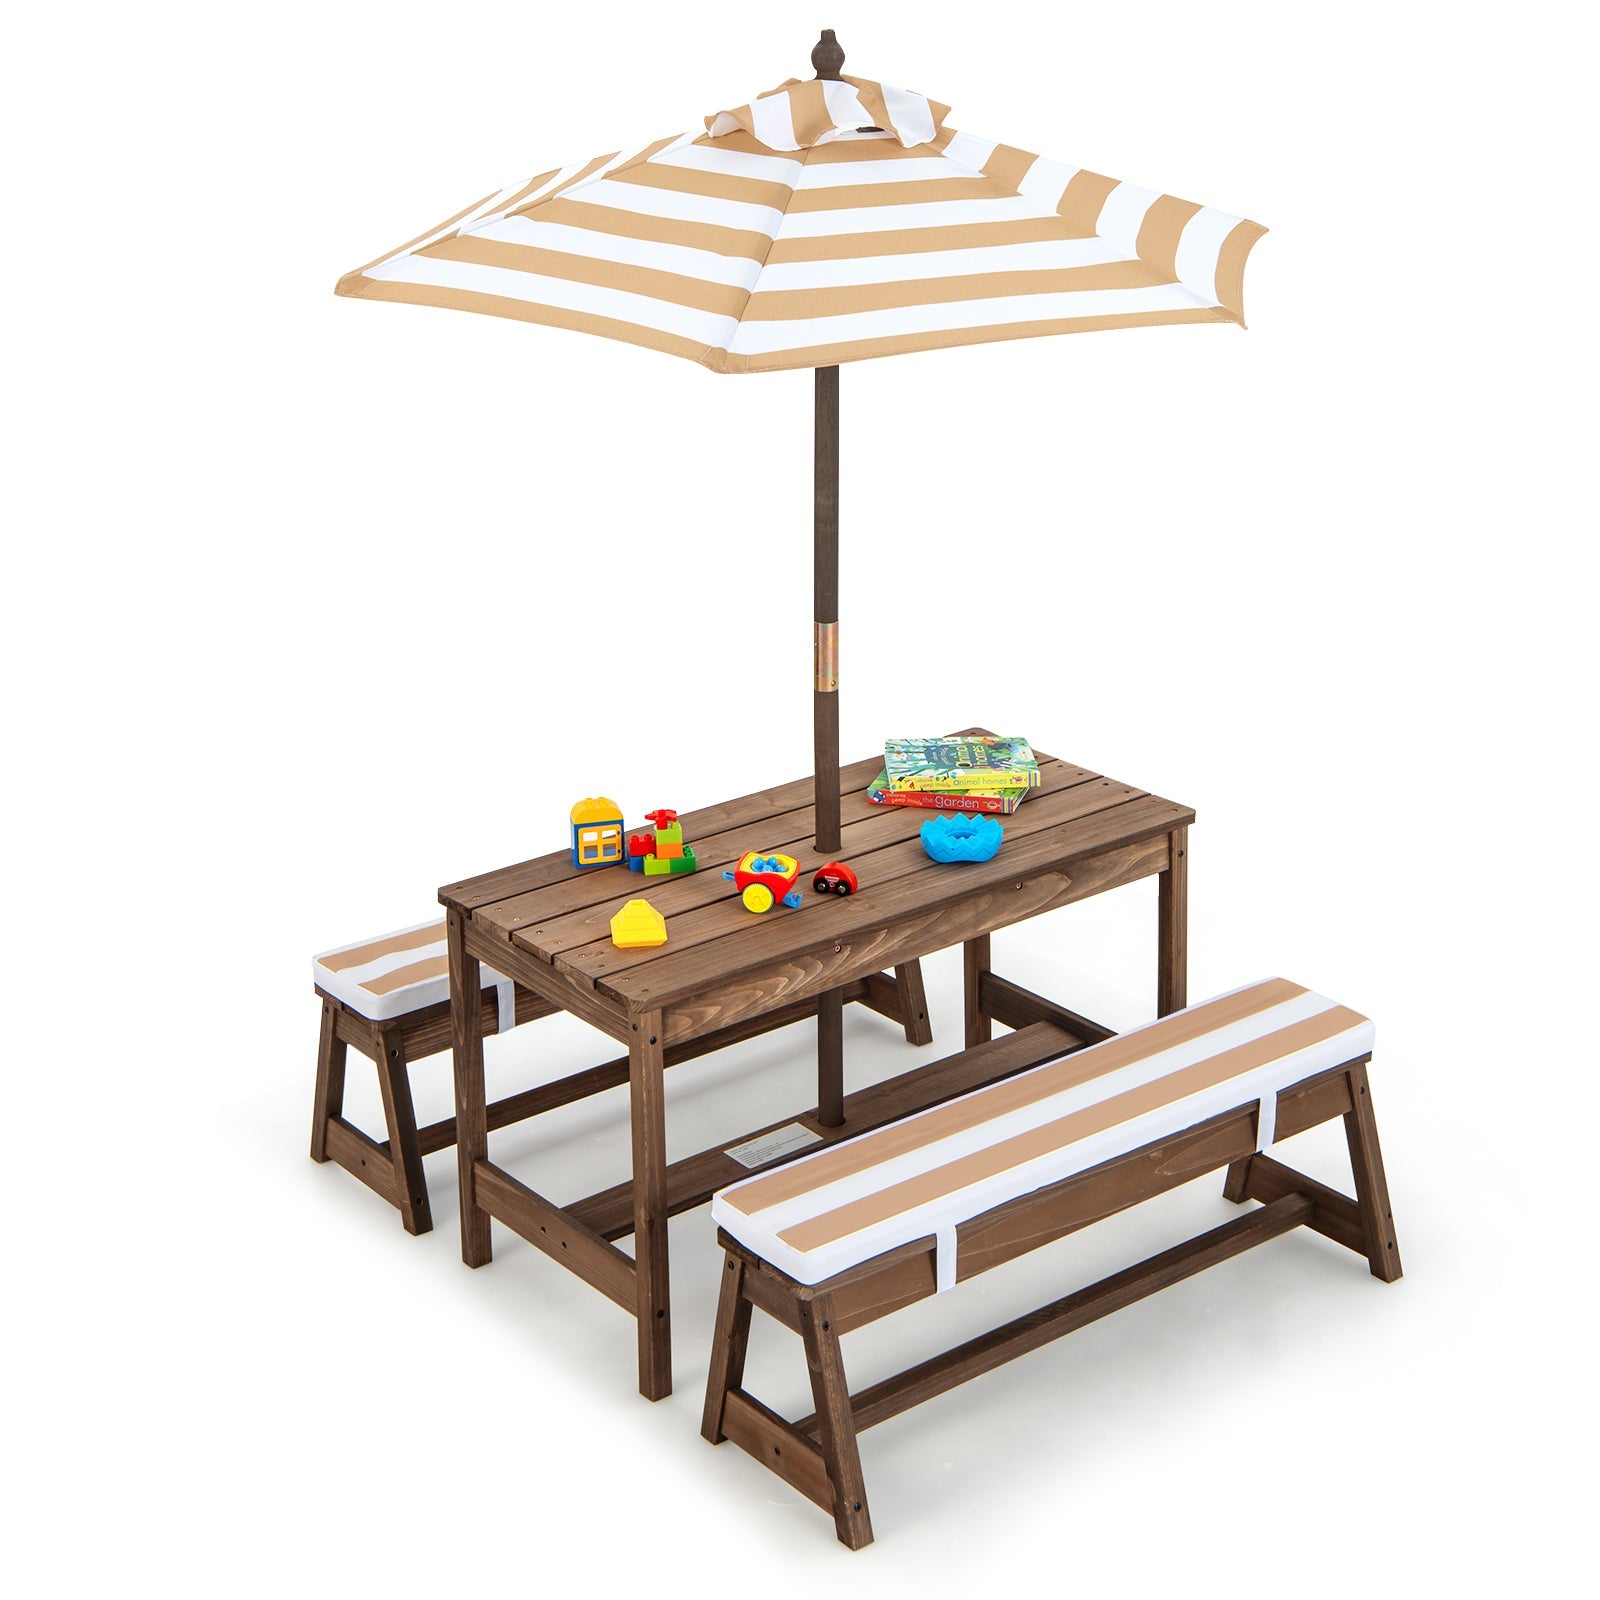 Kids Table & Bench Set: Umbrella & Cushions for Playful Indoor-Outdoor Adventures